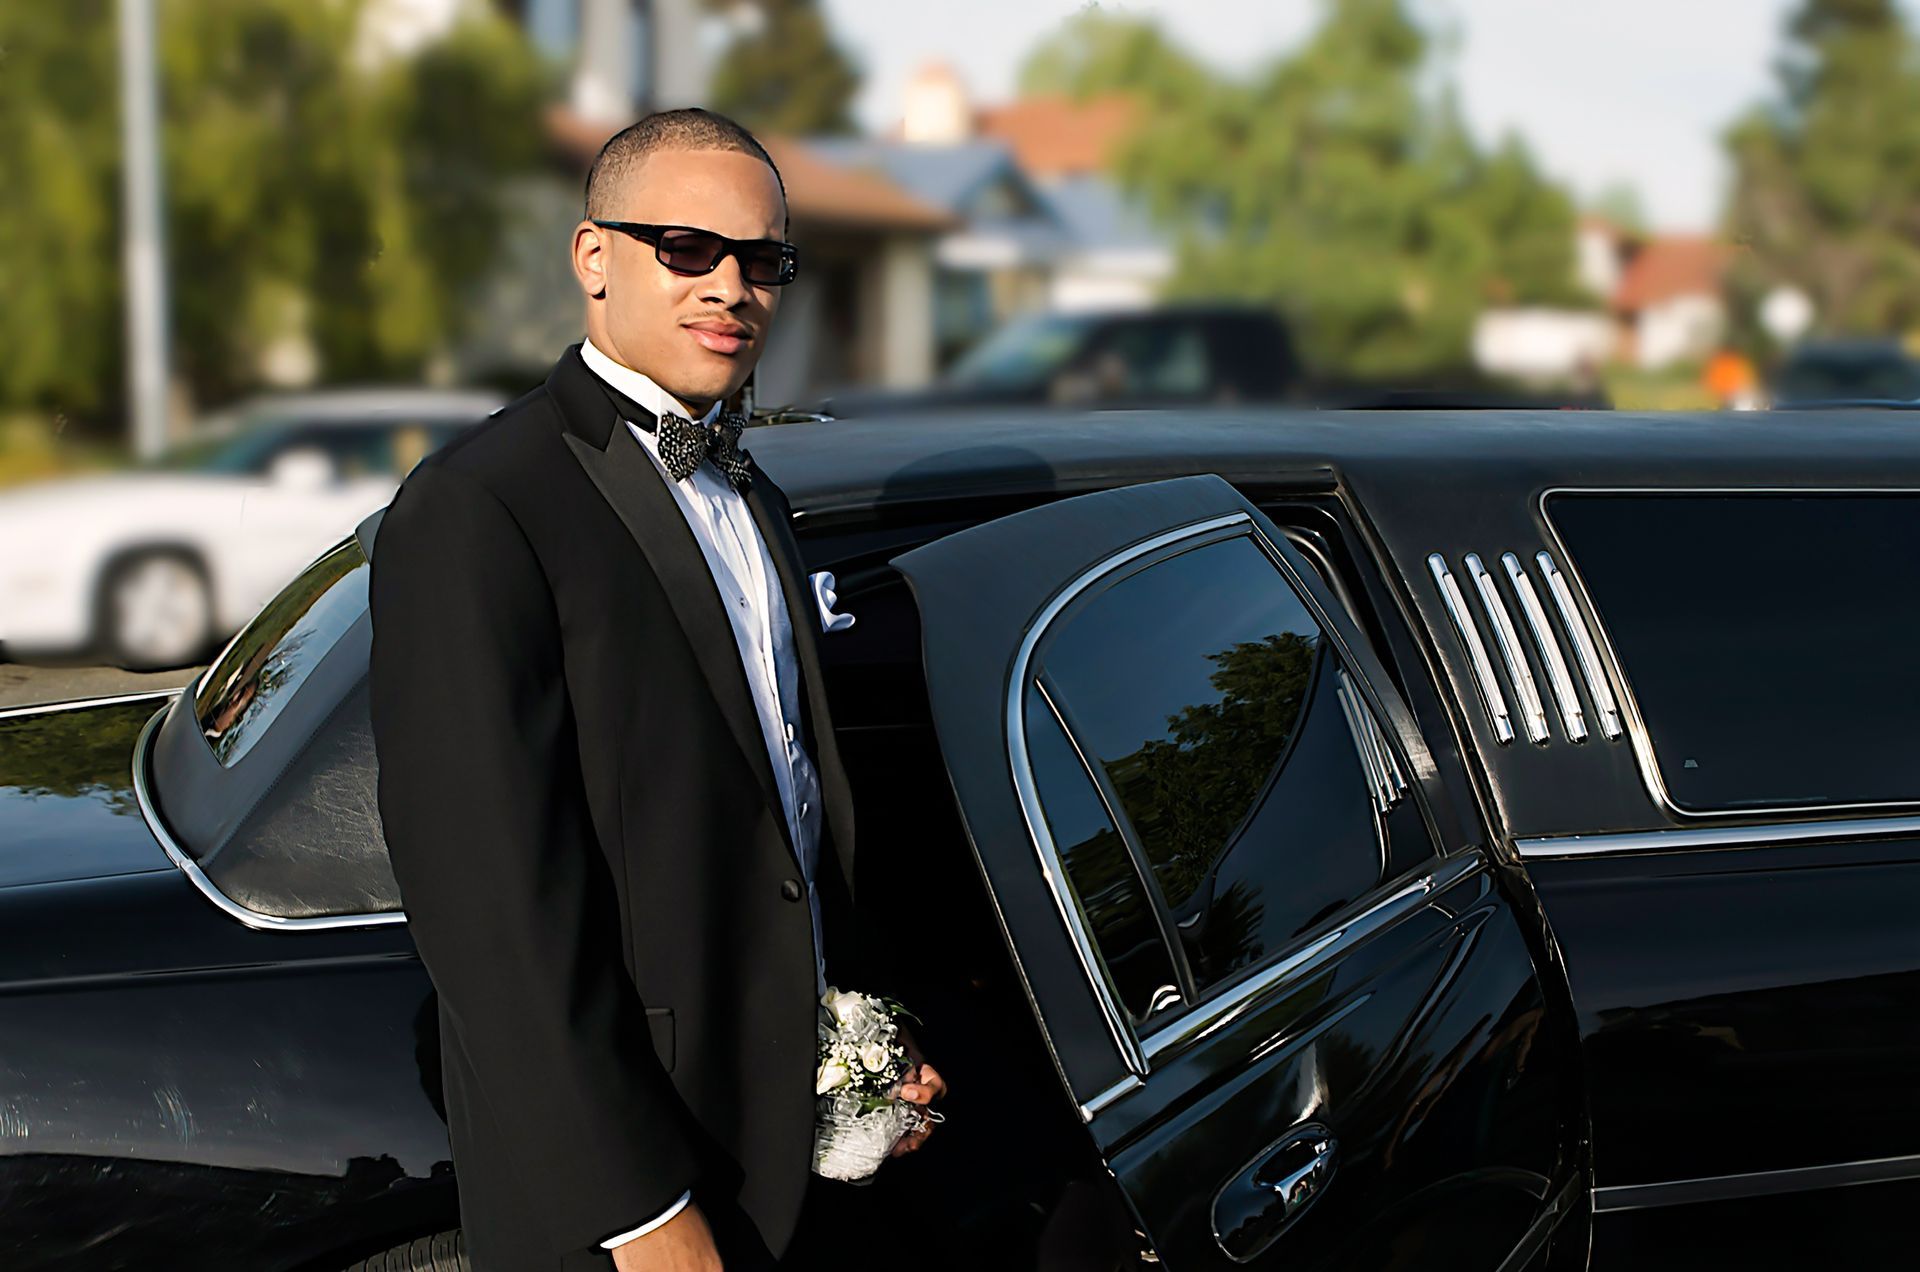 groom beside the limo